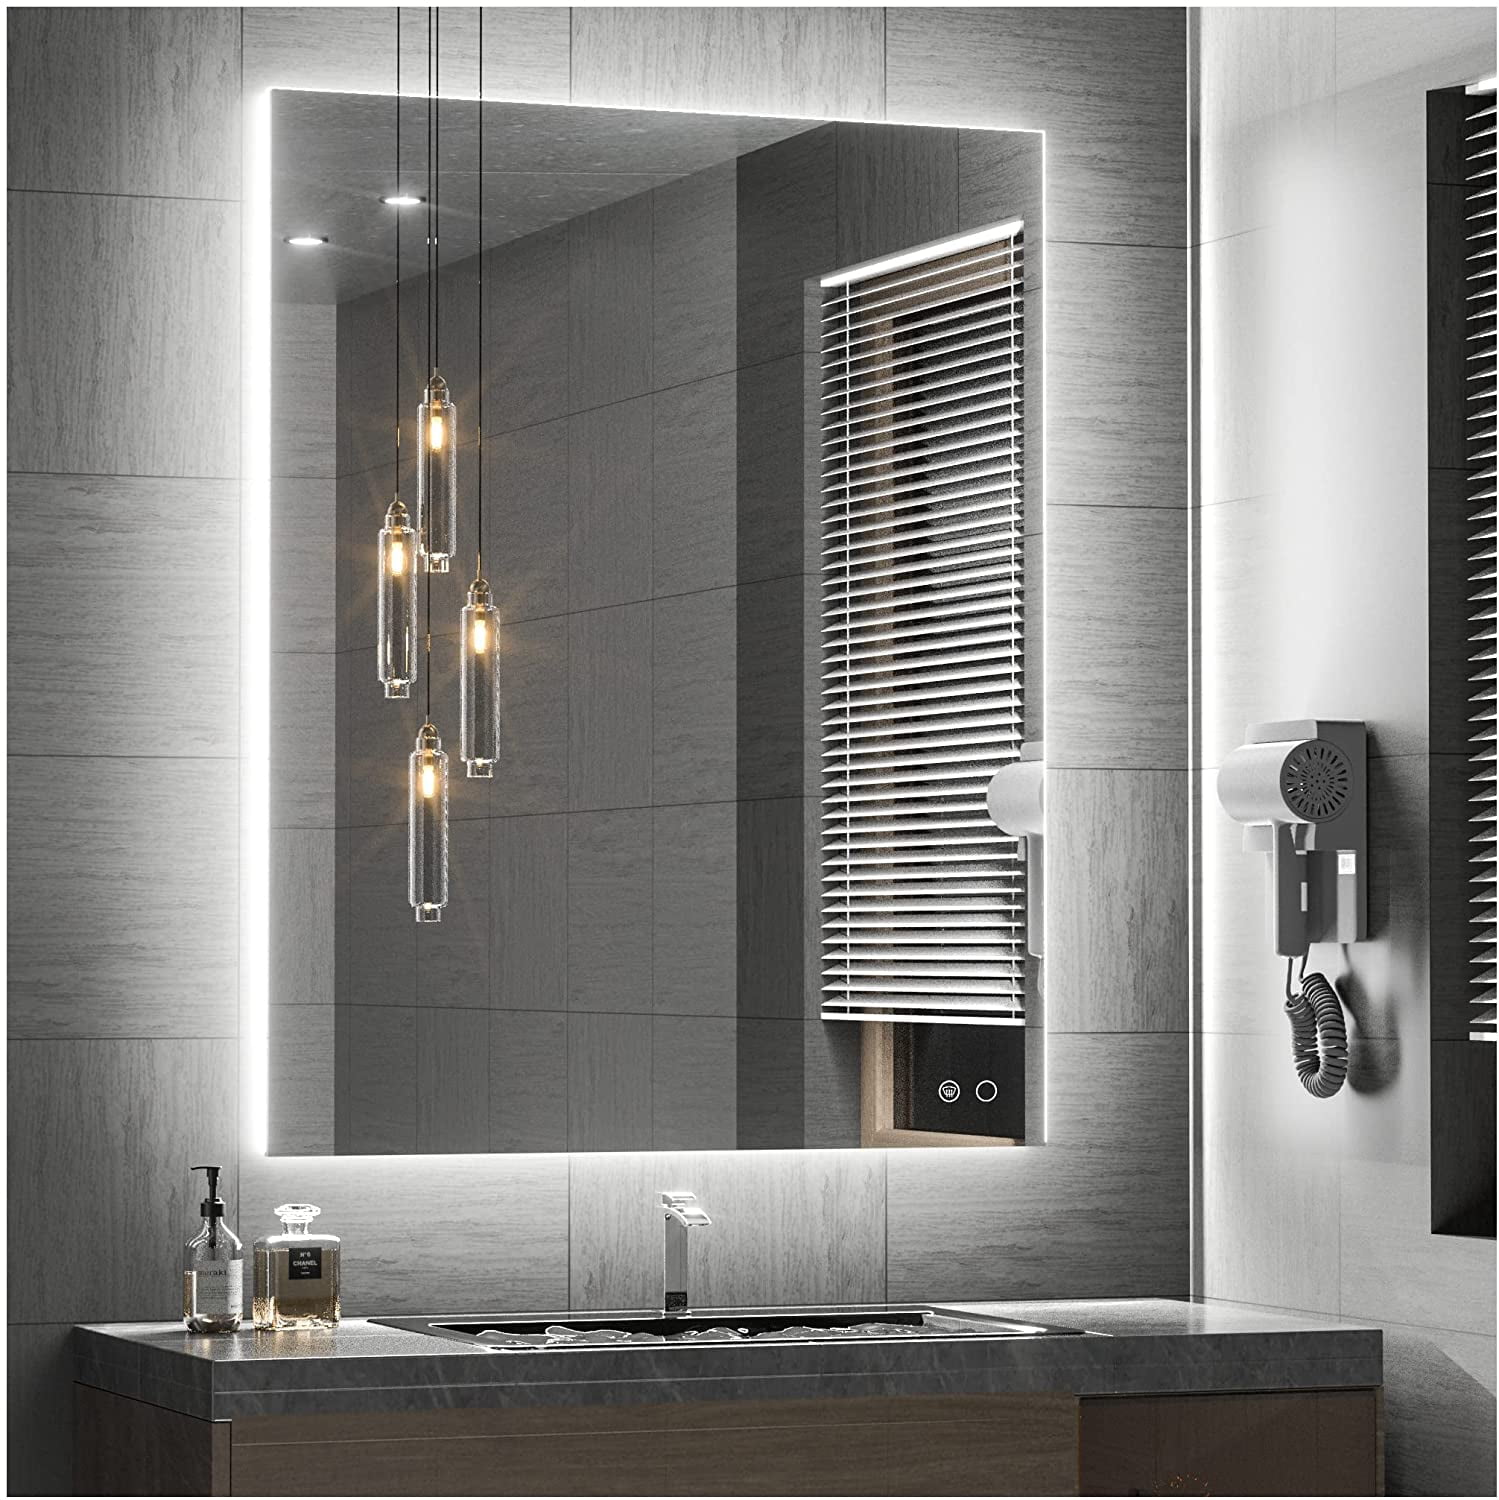 Details about   Modern Vanity Light Bathroom Crystal LED Wall Sconce Light Mirror Make-up Lamp 